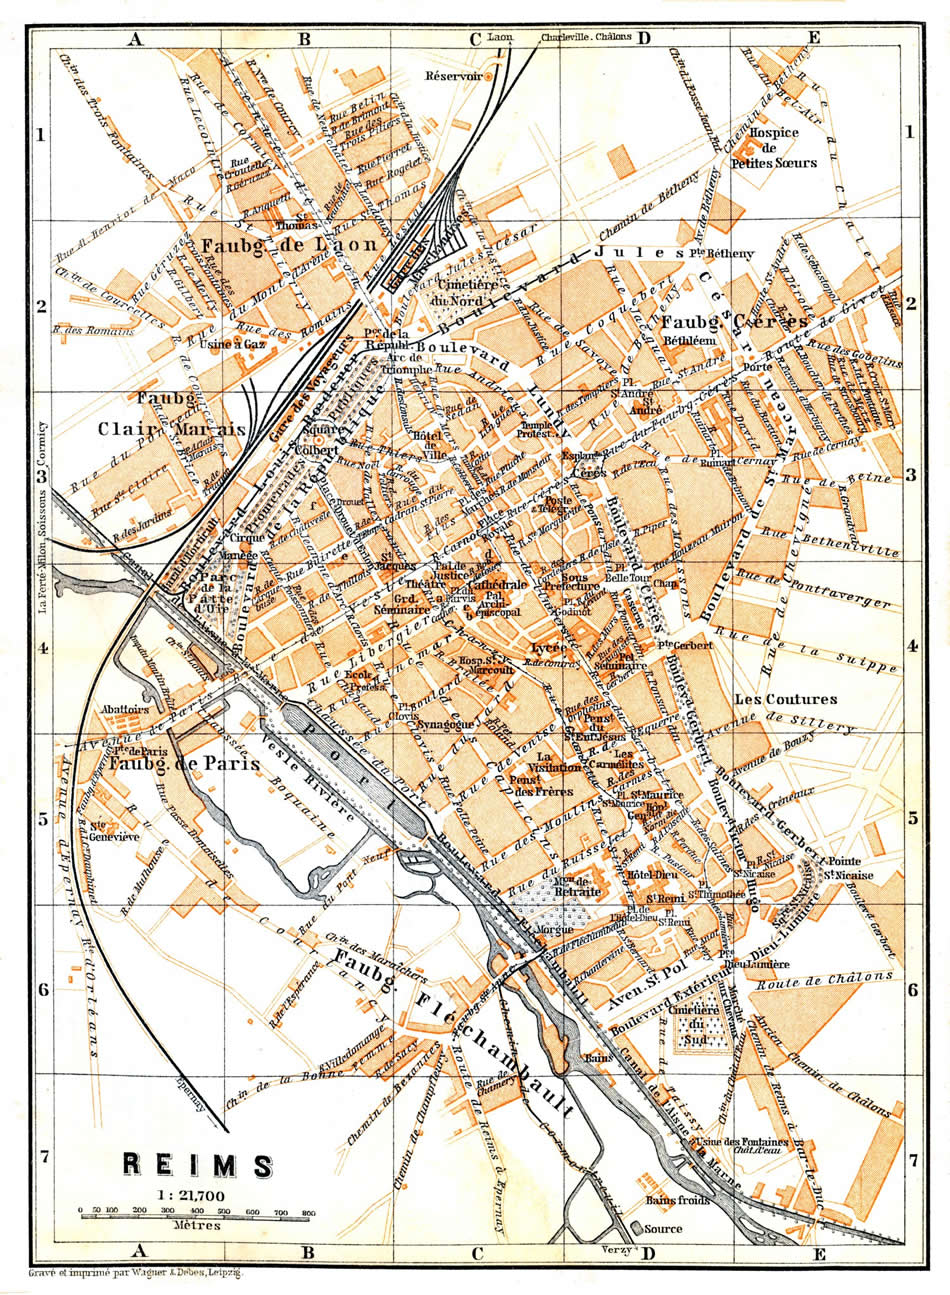 Reims plan 1899